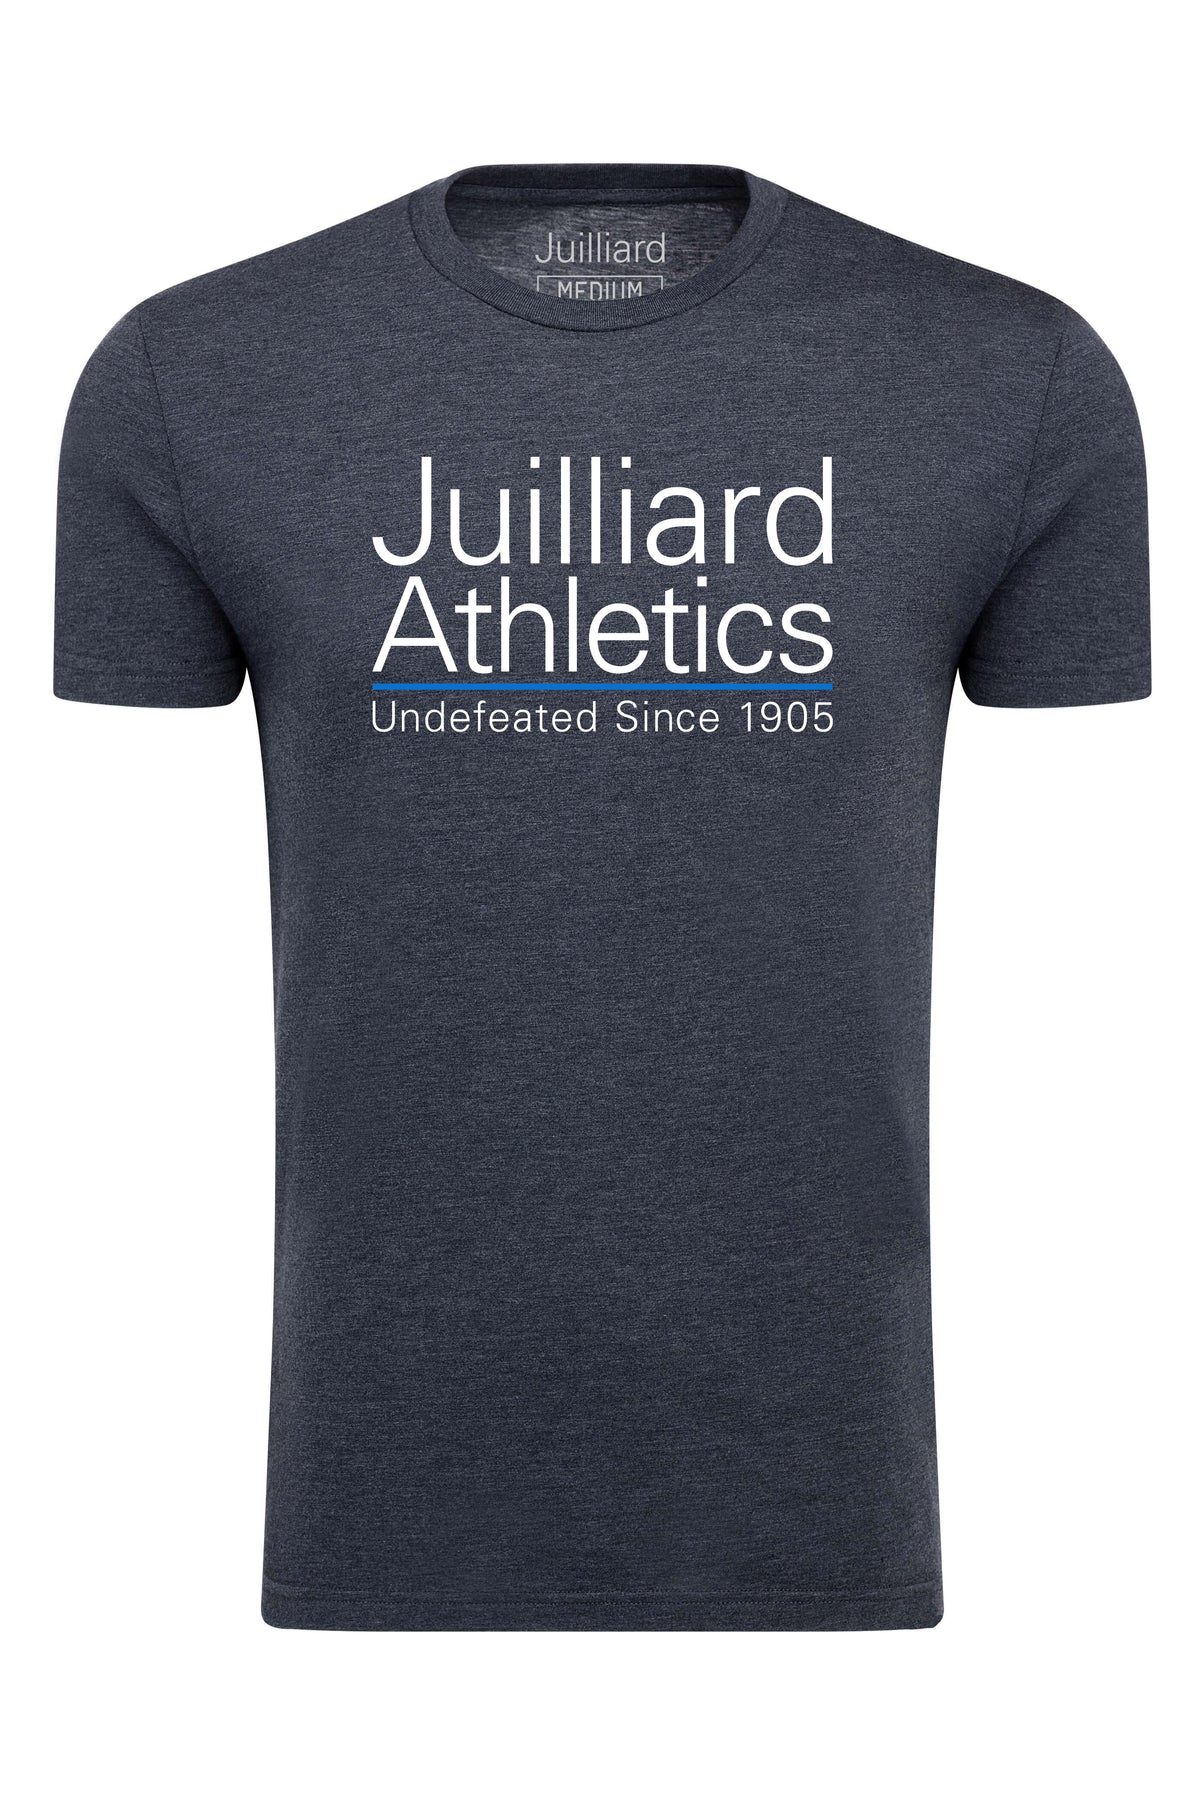 T-Shirt: Juilliard Athletics Undefeated